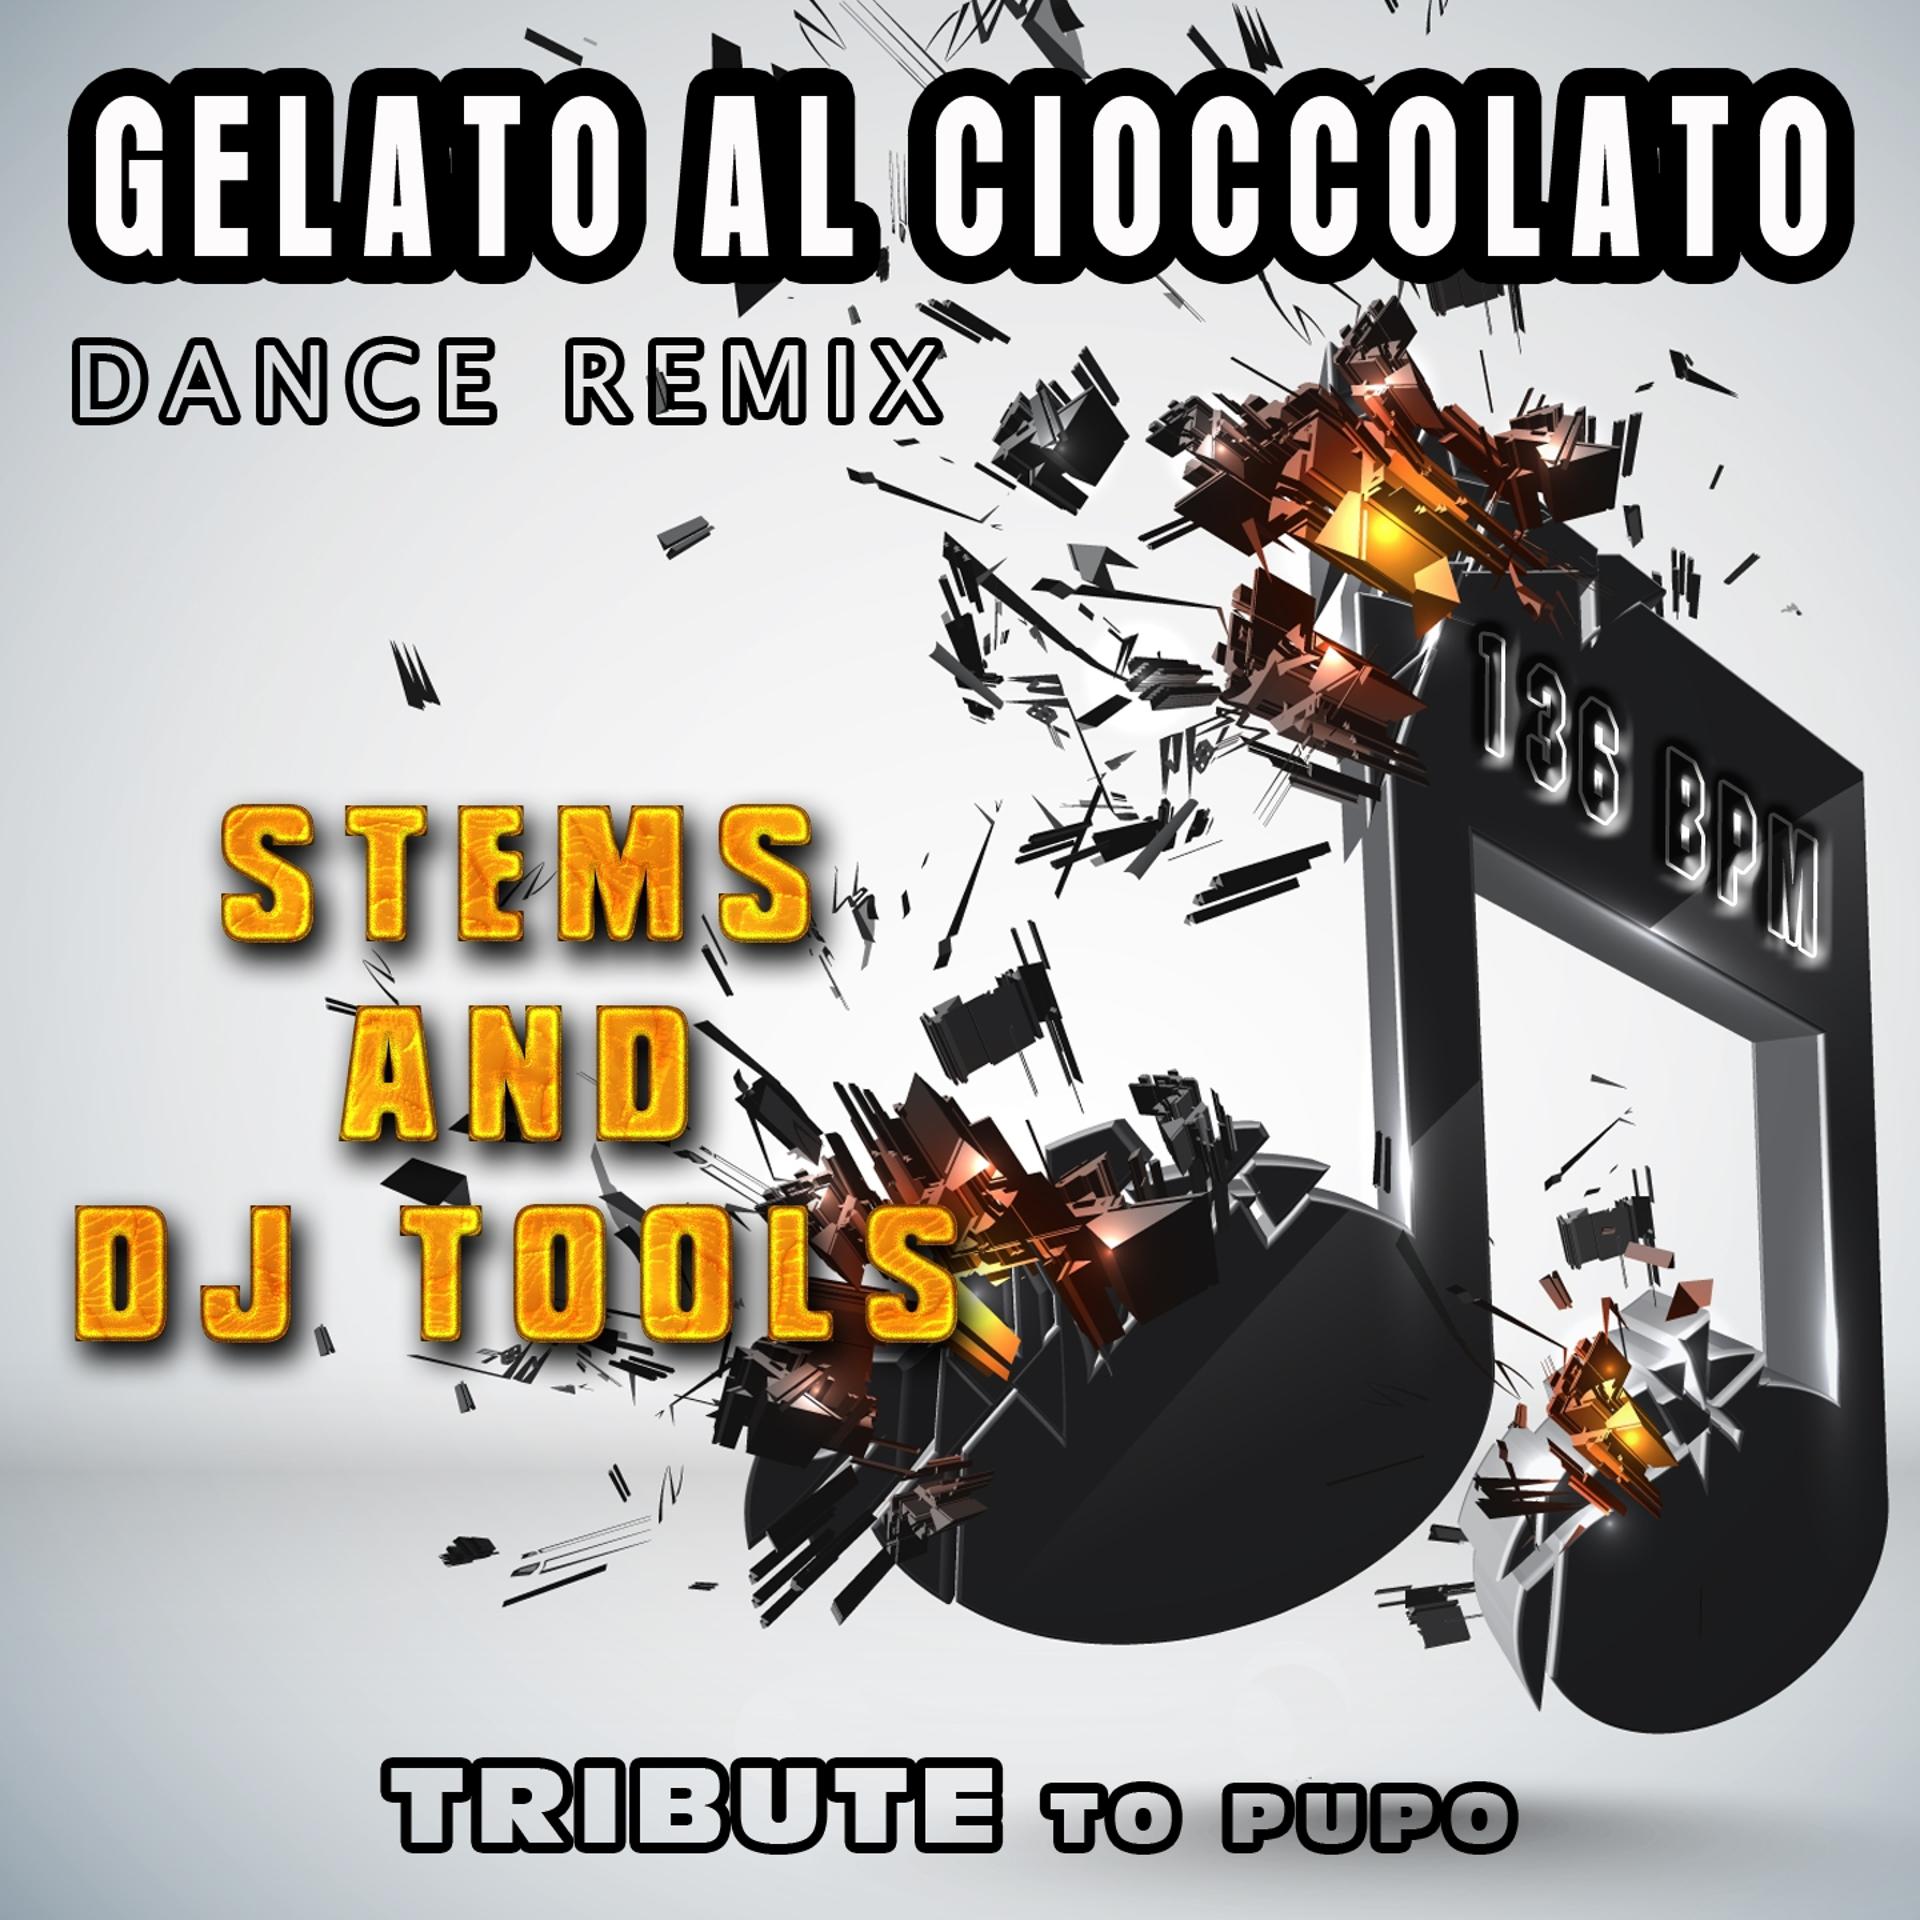 Постер альбома Gelato al cioccolato: Dance Remix, Stems and DJ Tools, Tribute to Pupo